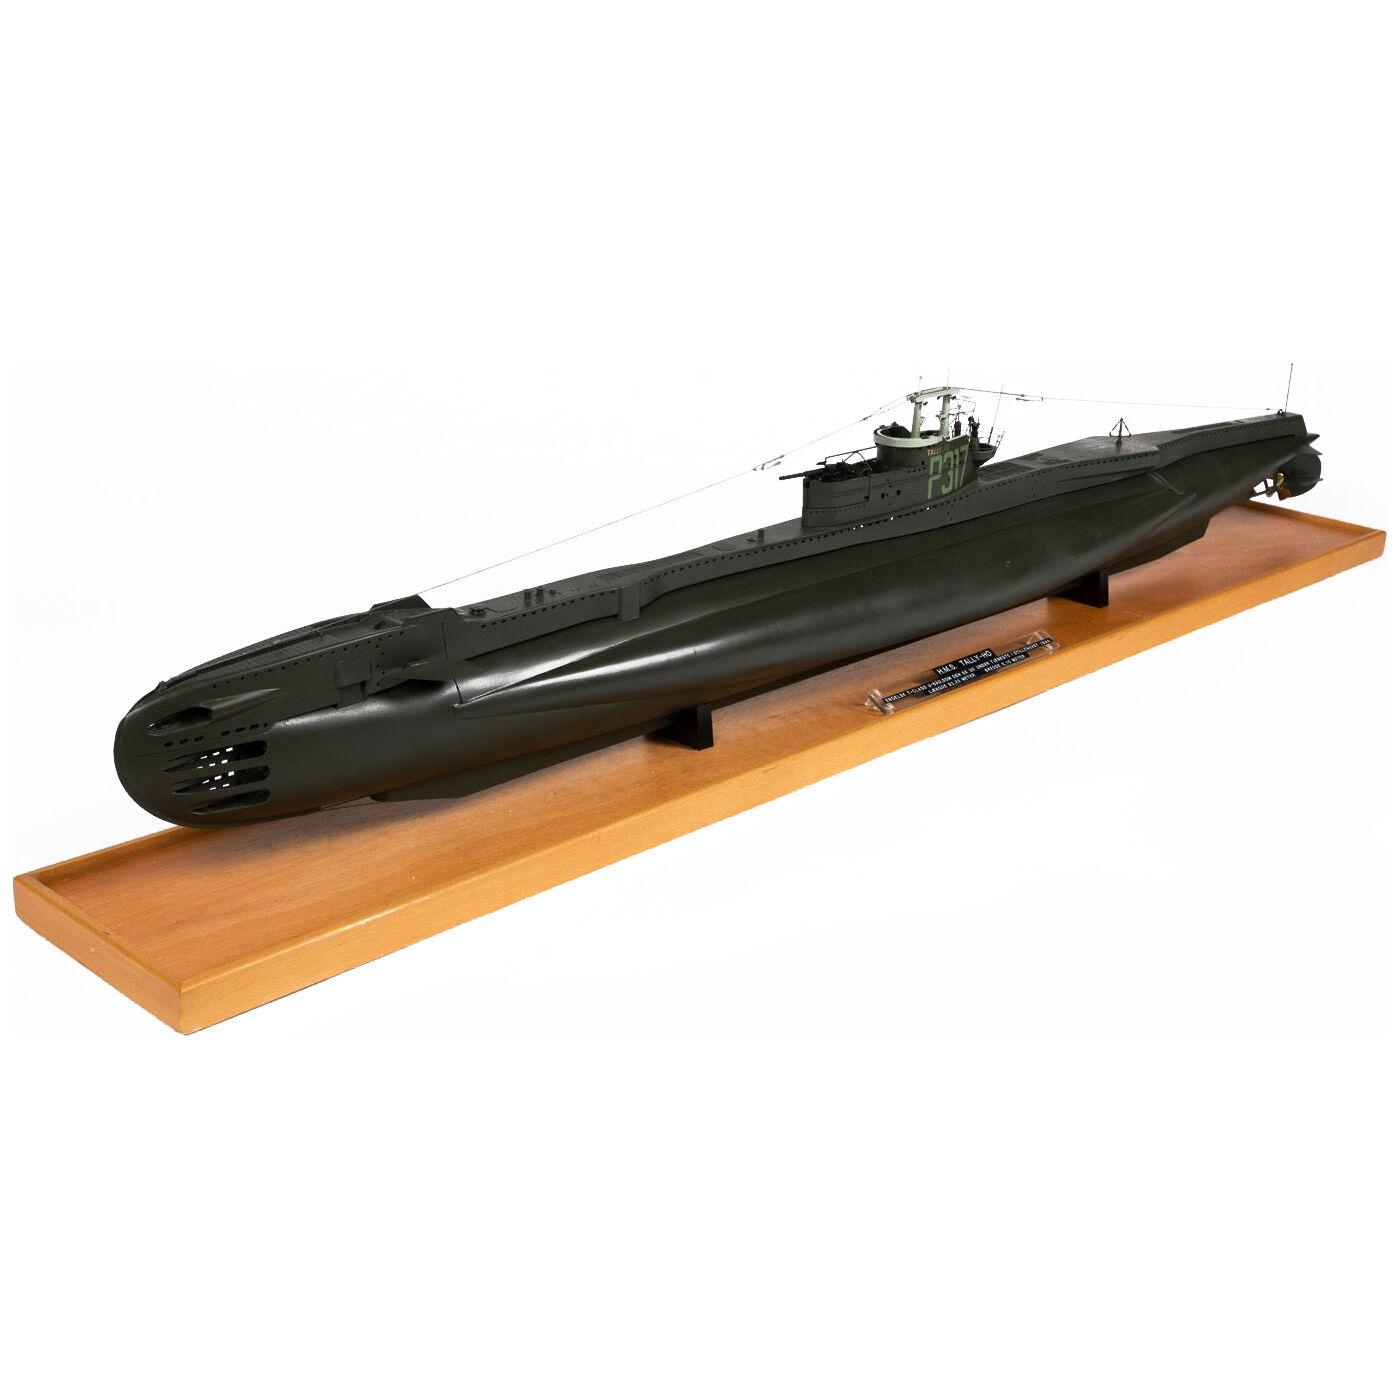 Scale model of the Royal Navy submarine HMS Tally-Ho